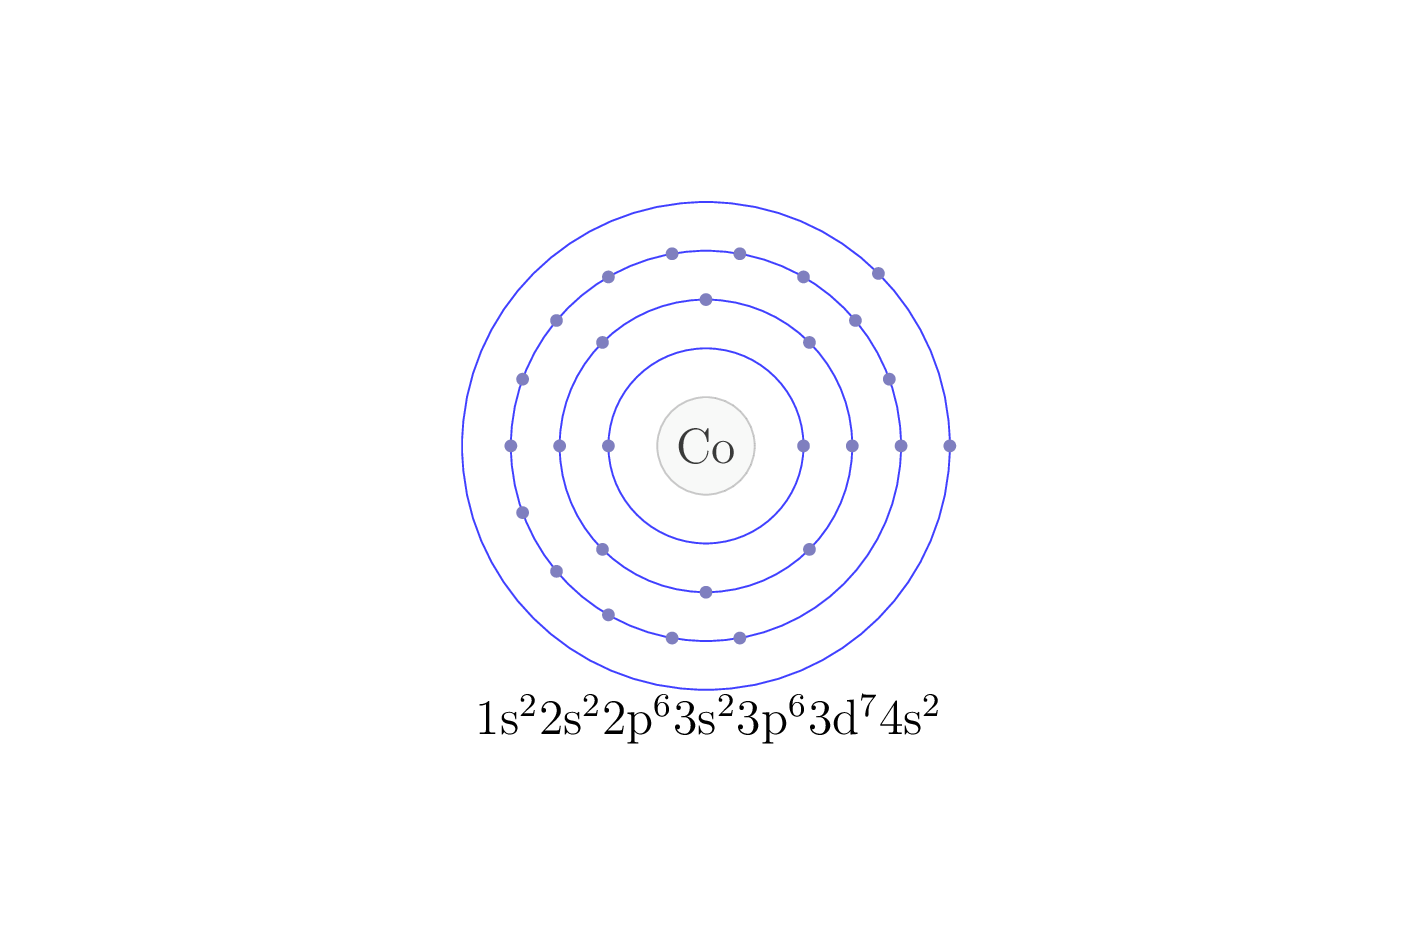 electron configuration of element Co